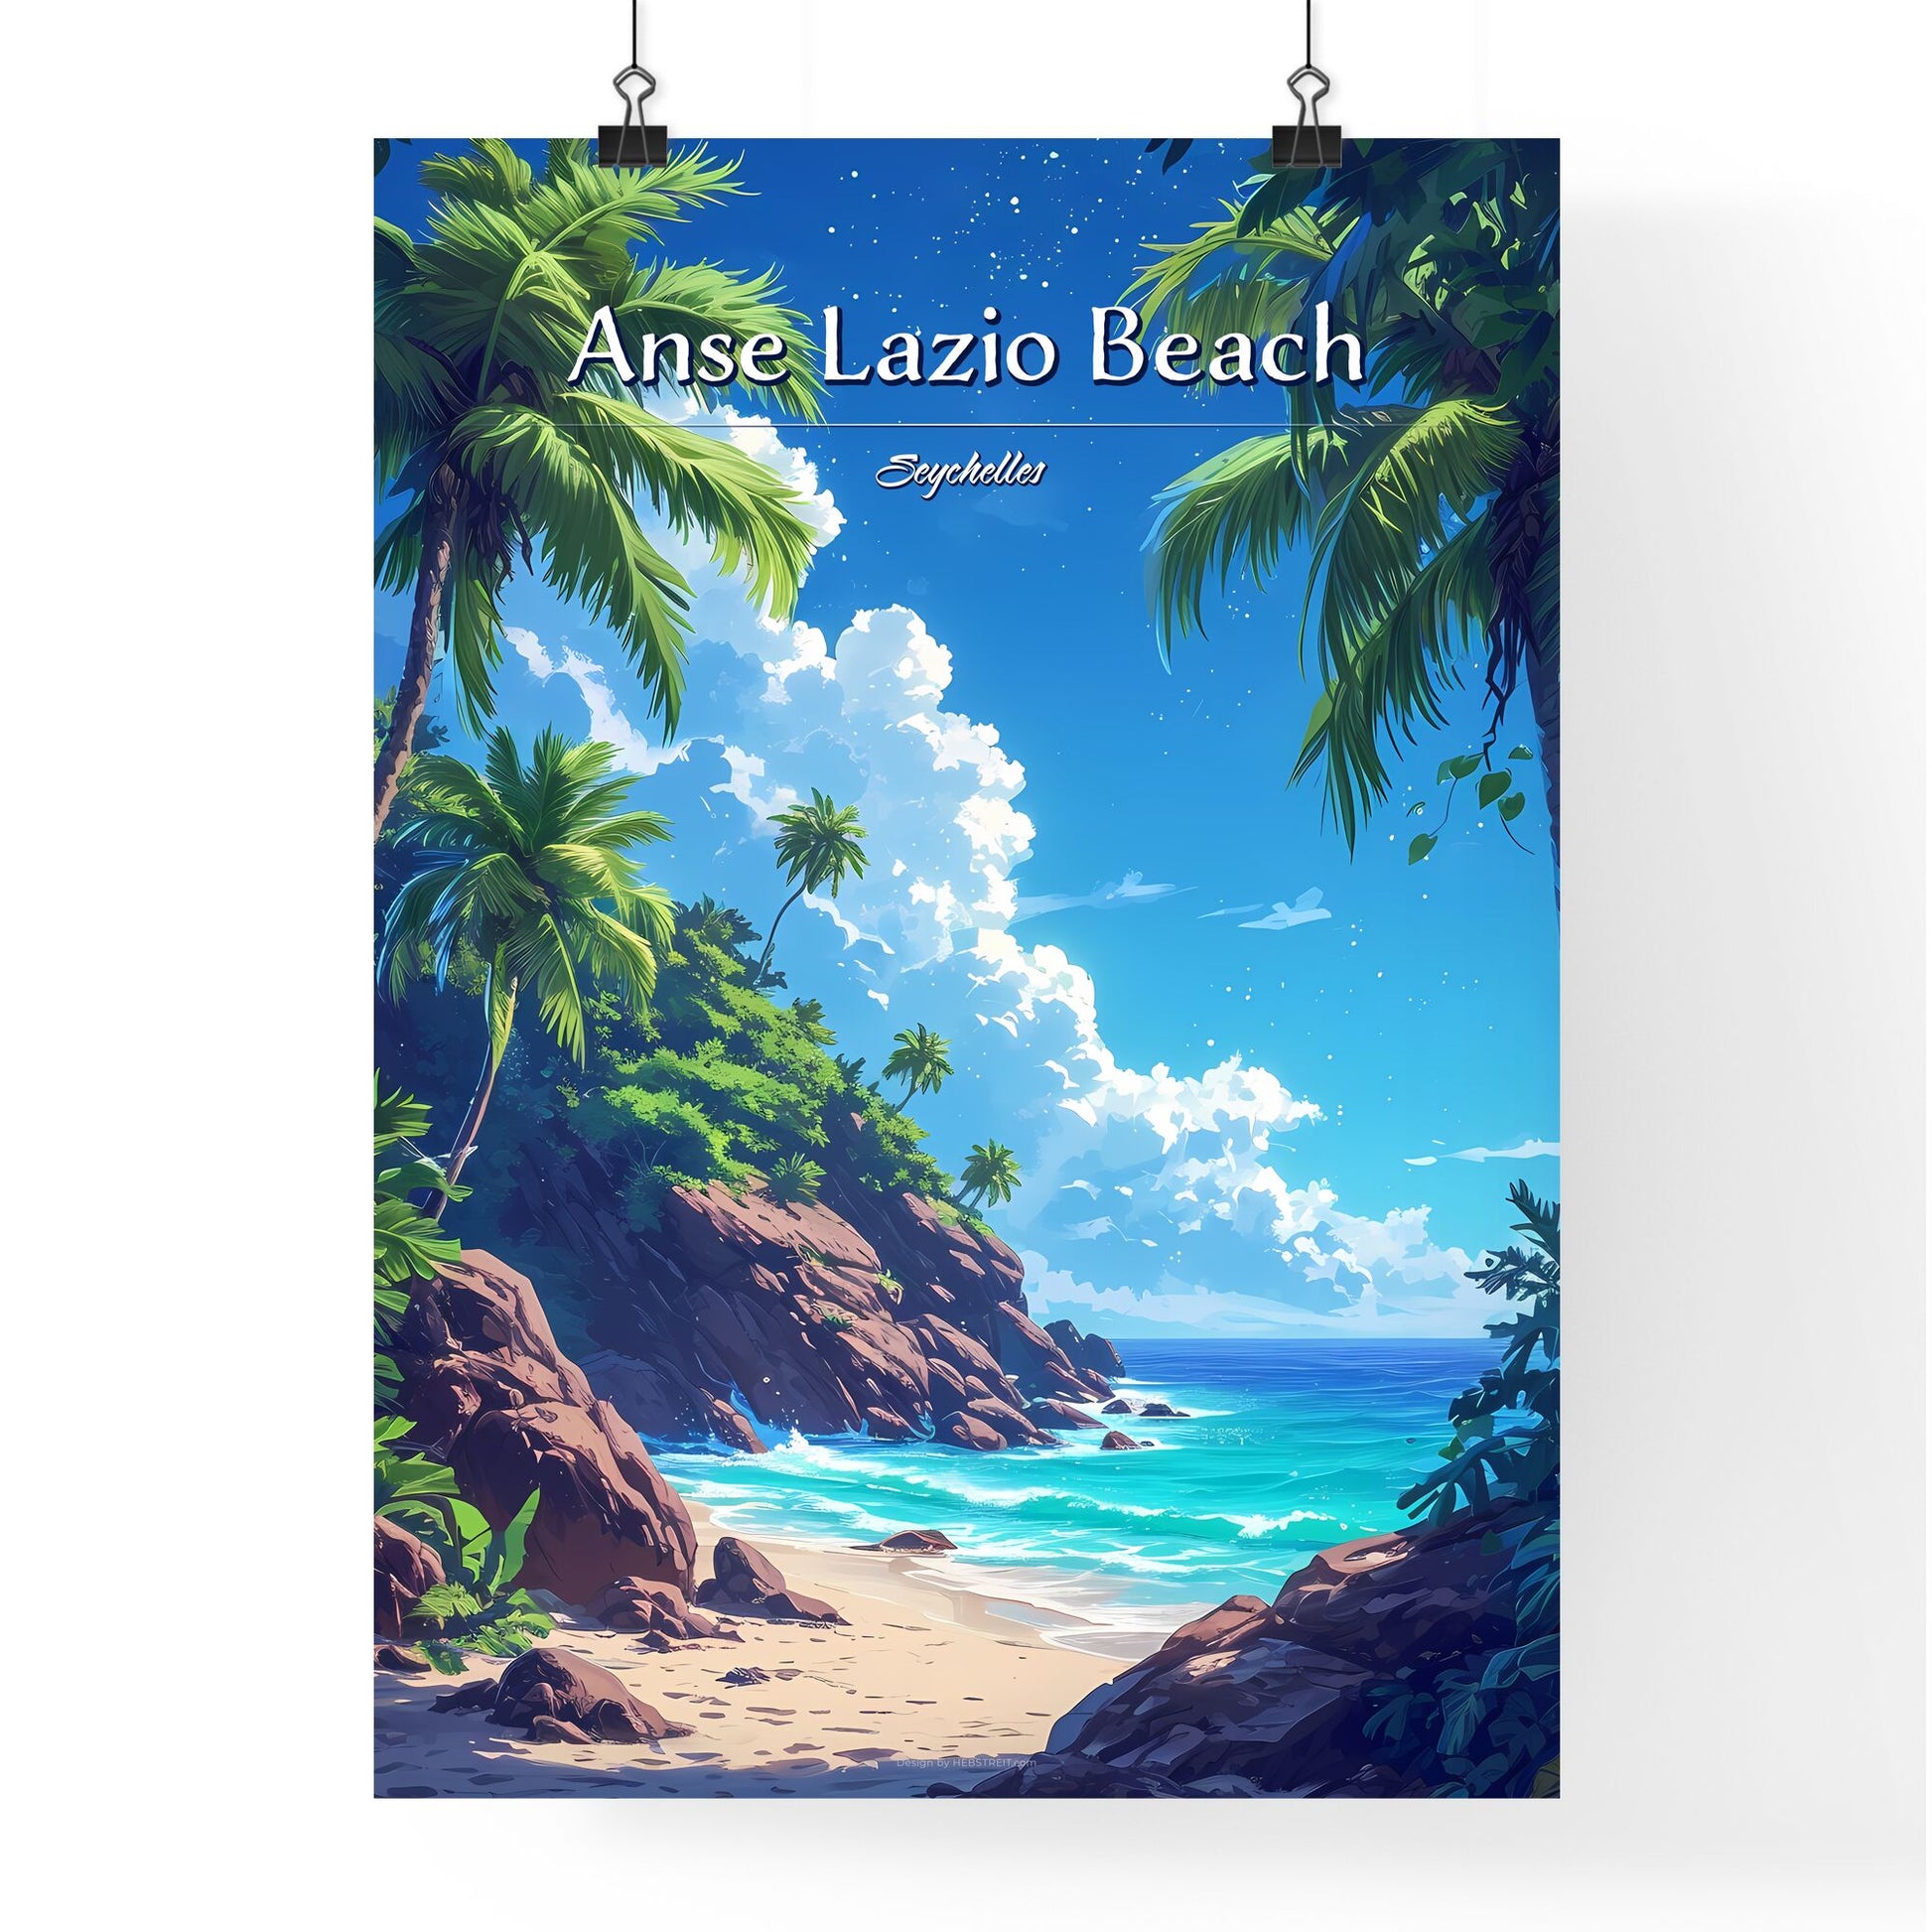 Anse Lazio Beach - Art print of a beach with palm trees and rocks Default Title